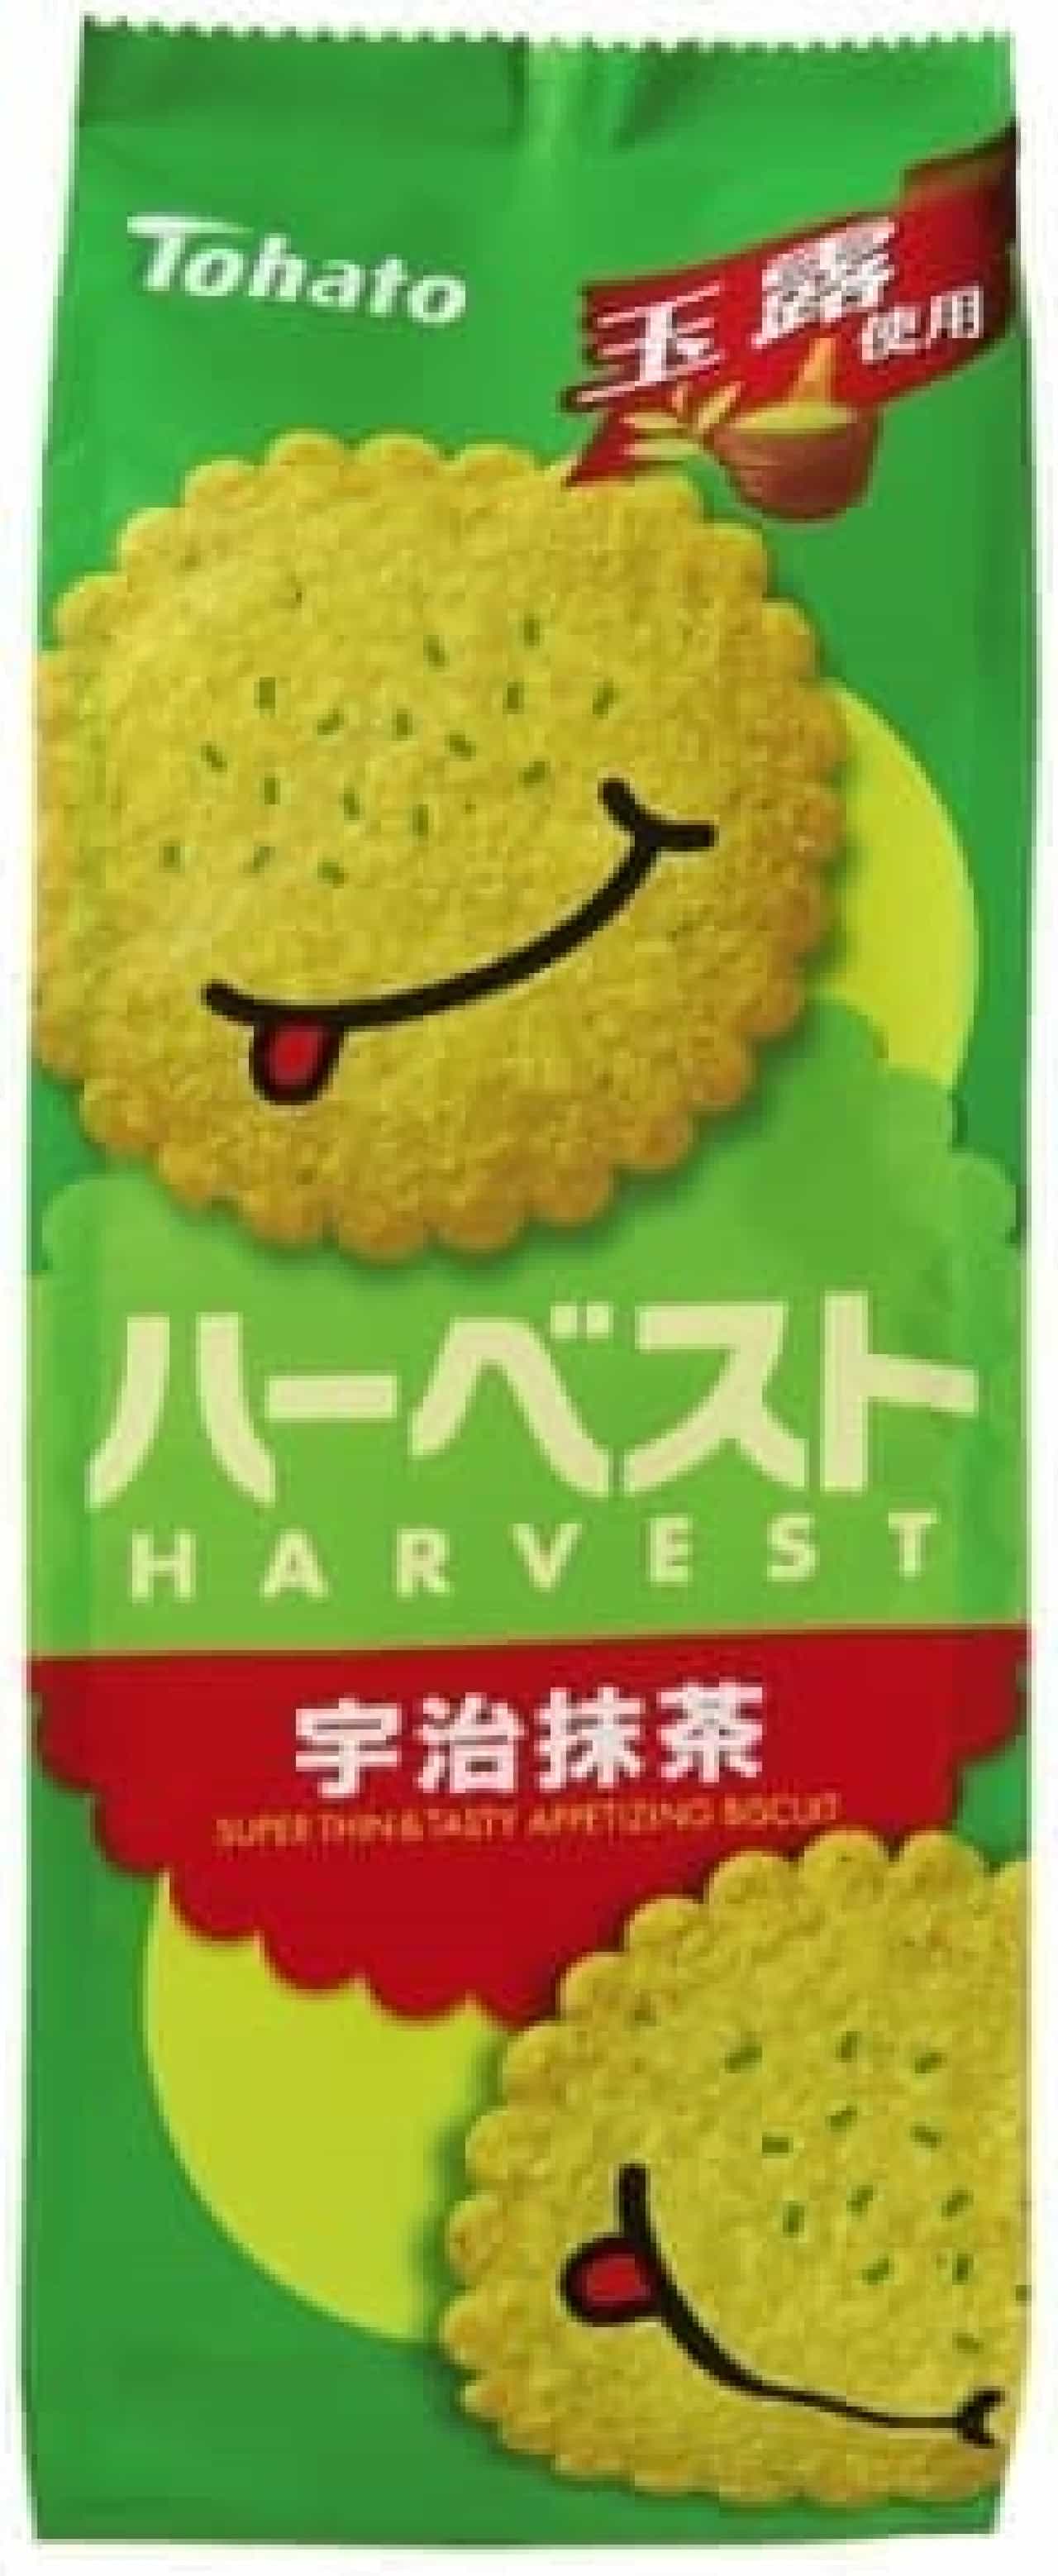 Tohato "Harvest Uji Matcha"